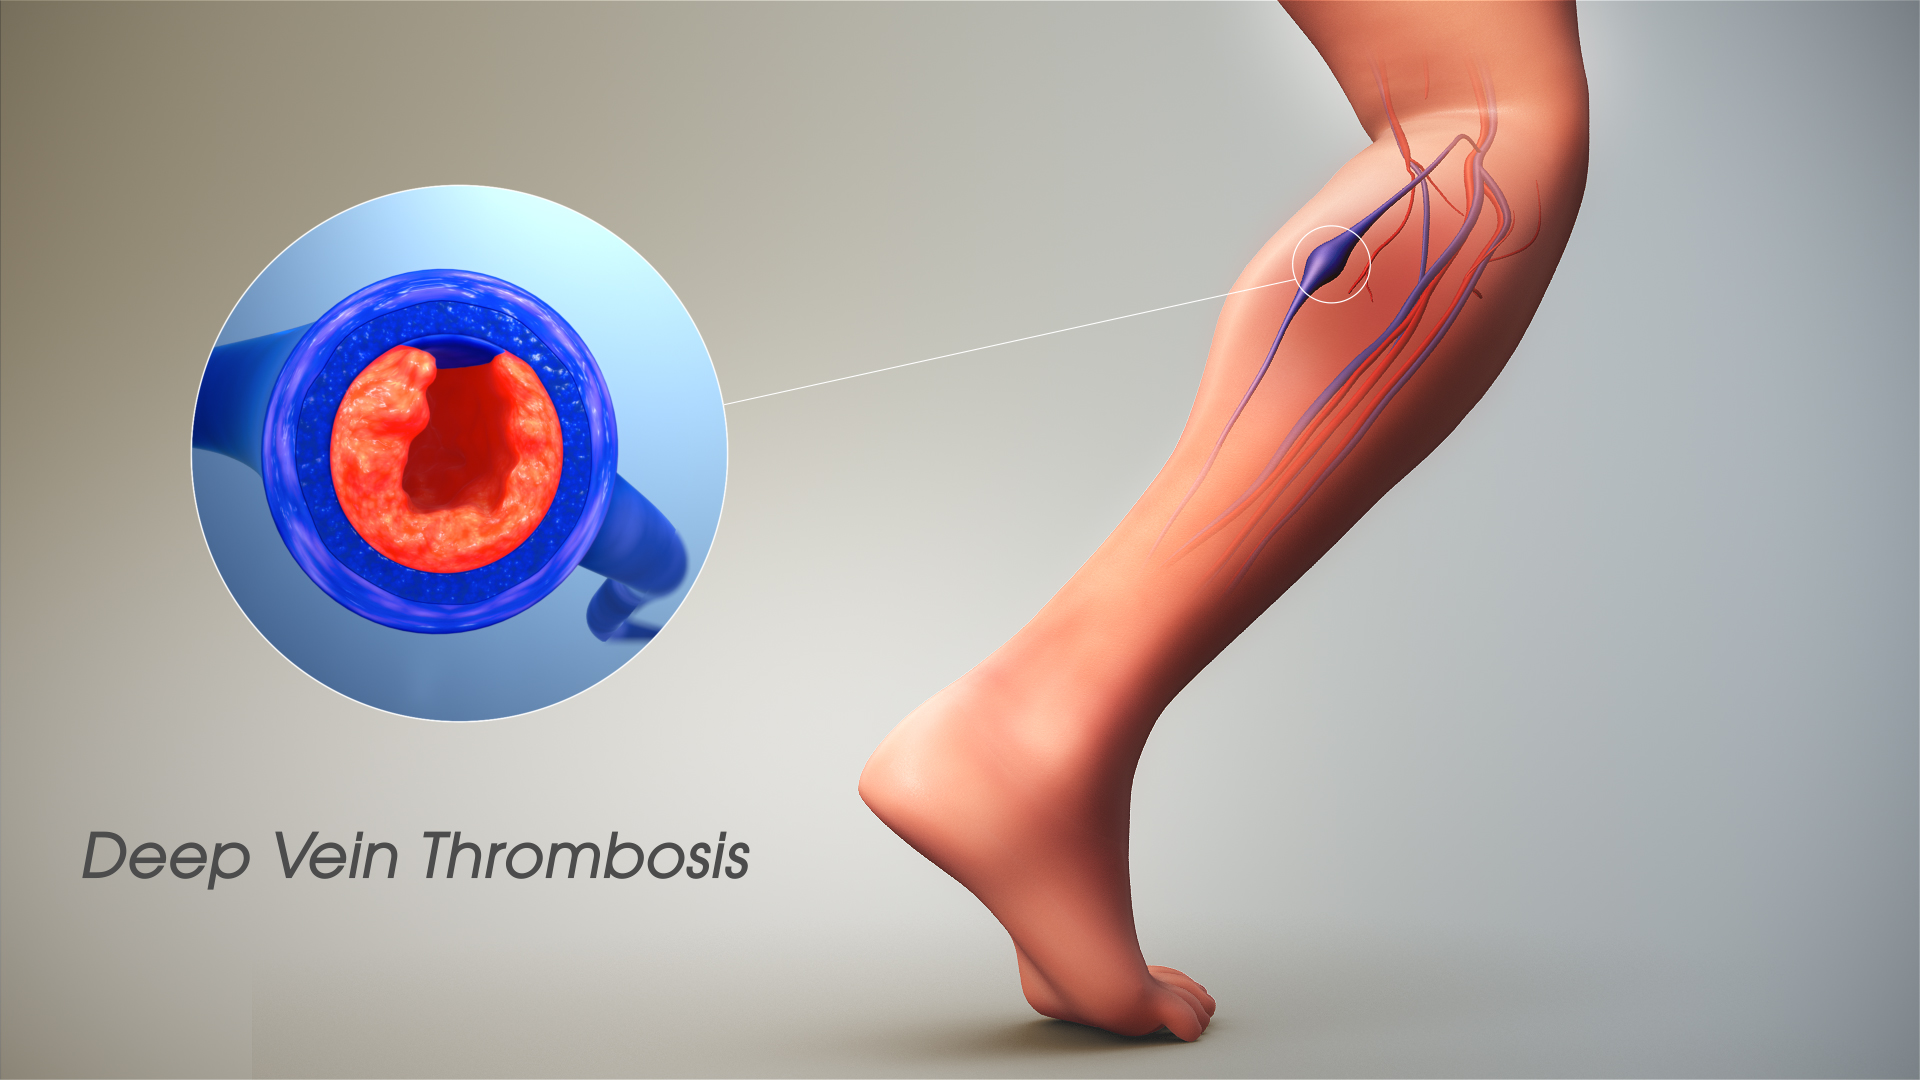 3D medical animation still showing Deep Vein Thrombosis